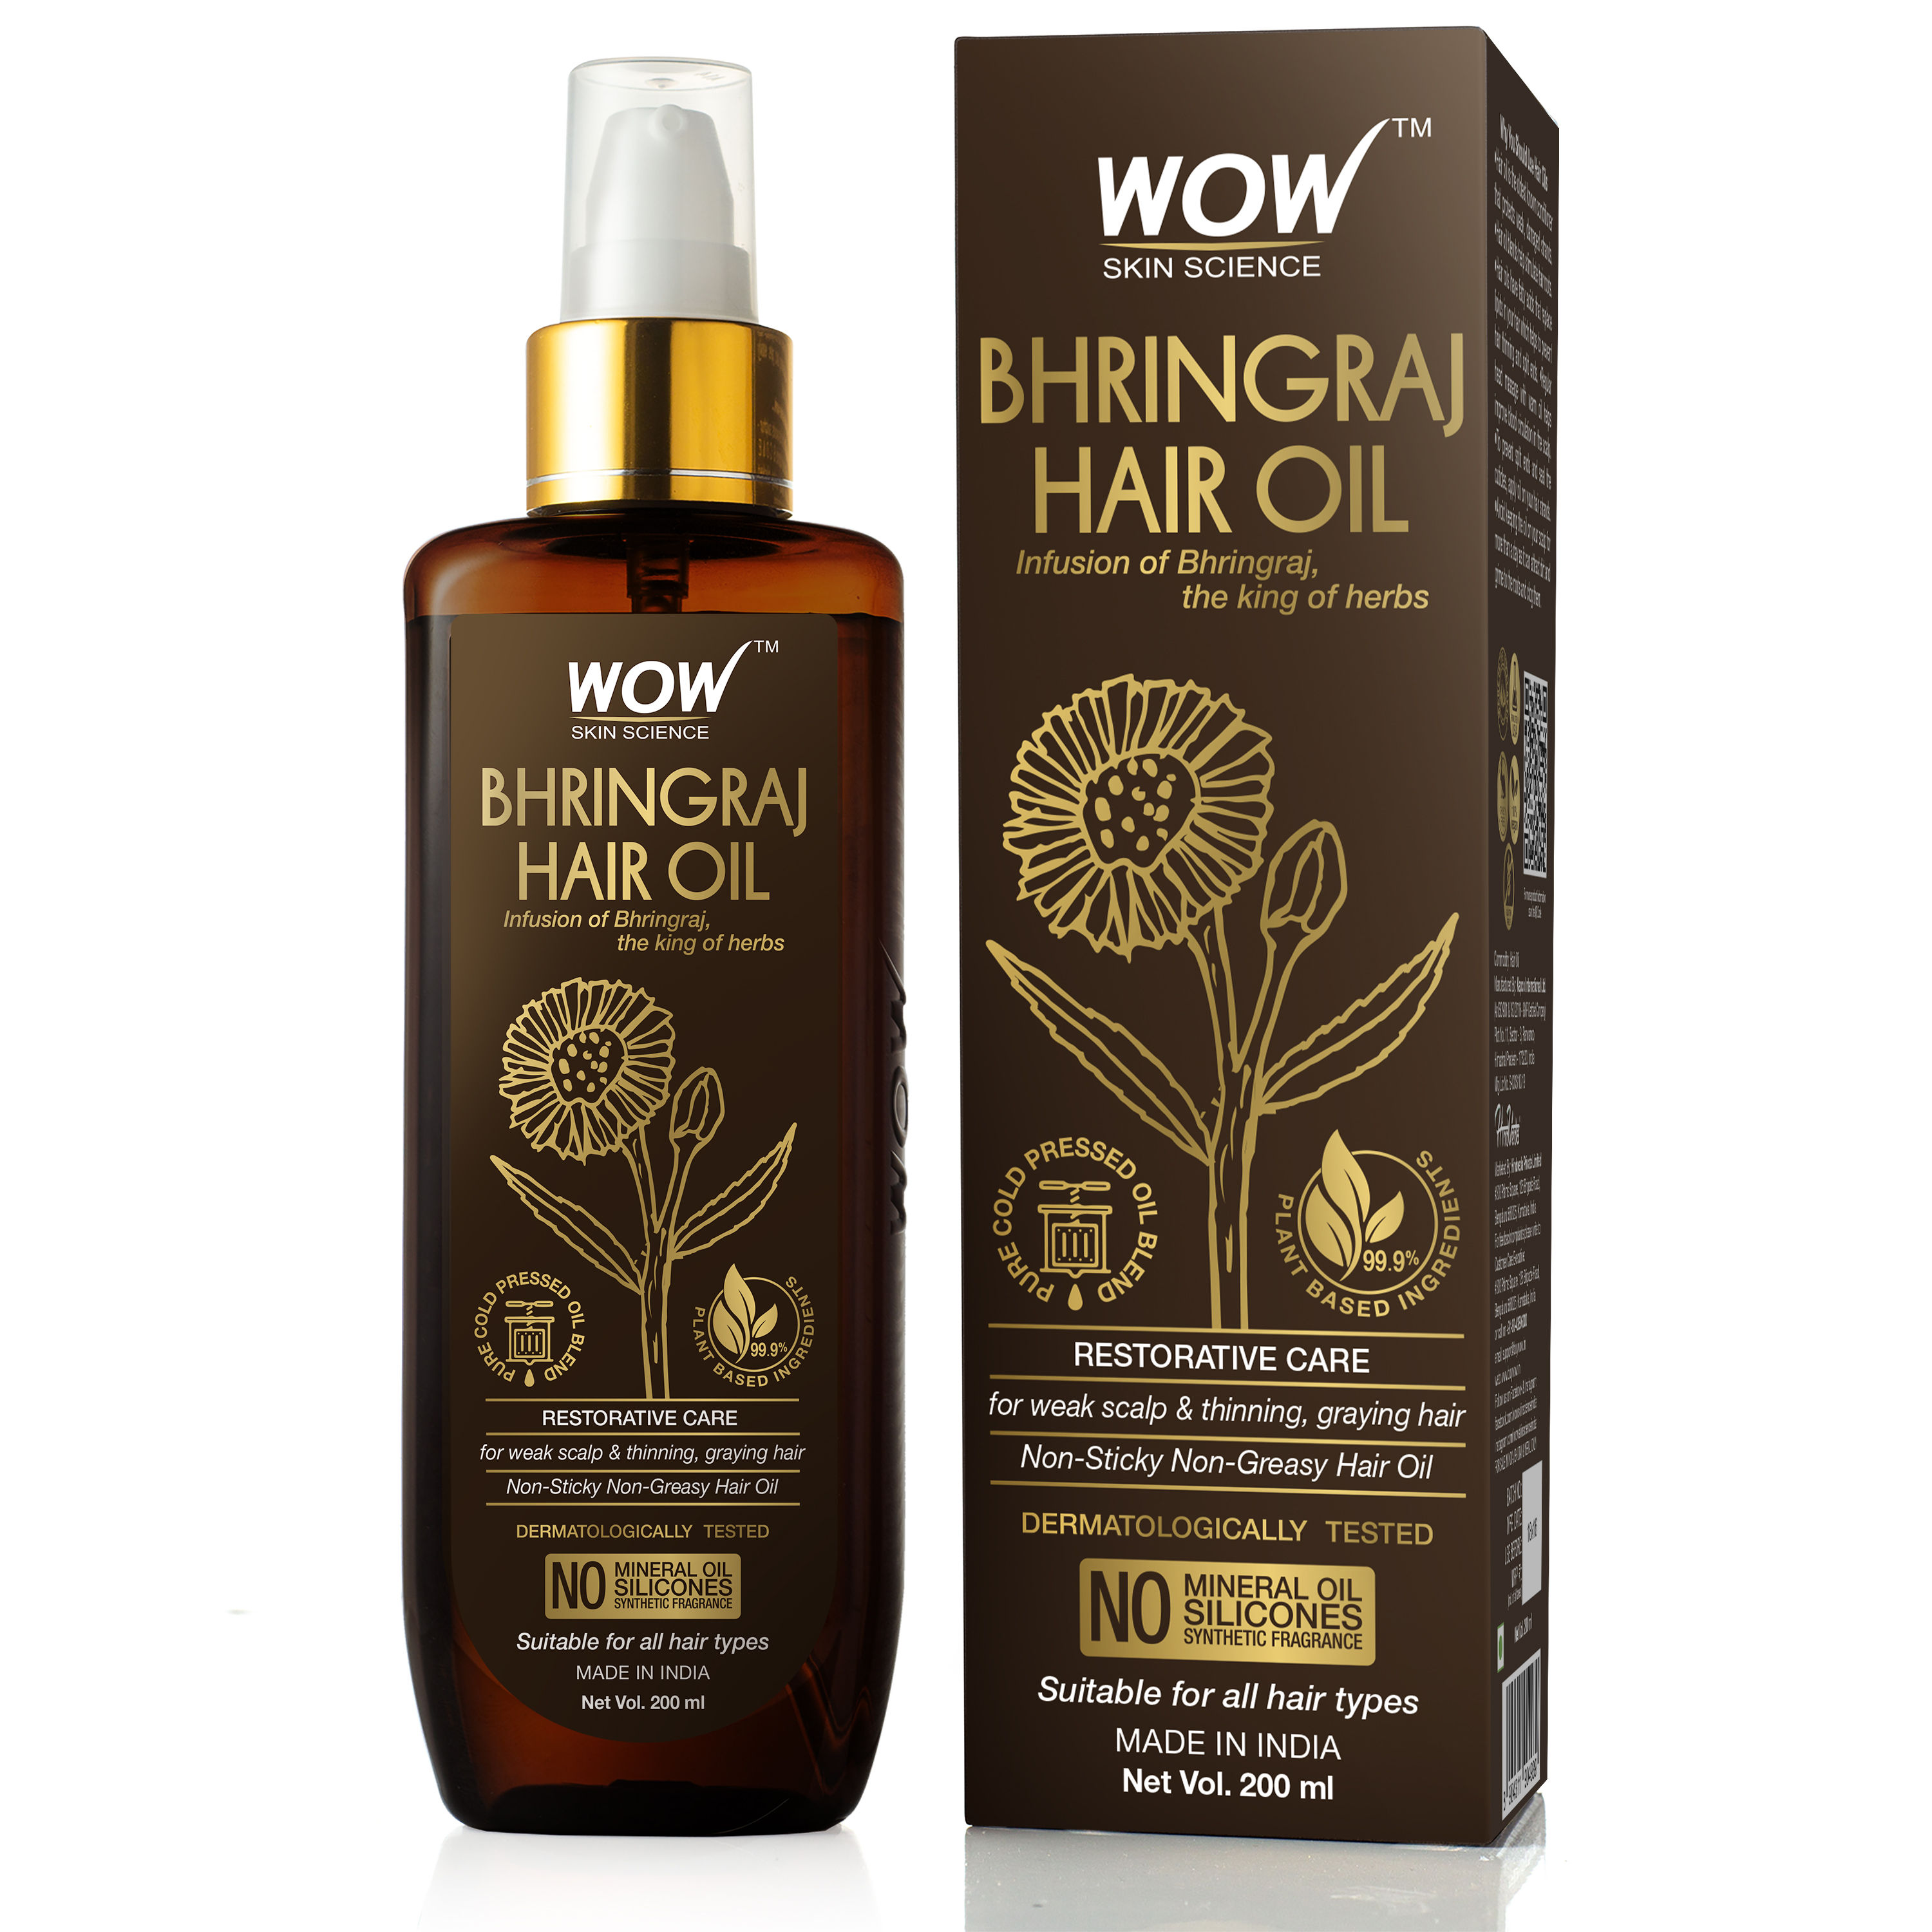 Wow Skin Science Bhringraj Hair Oil